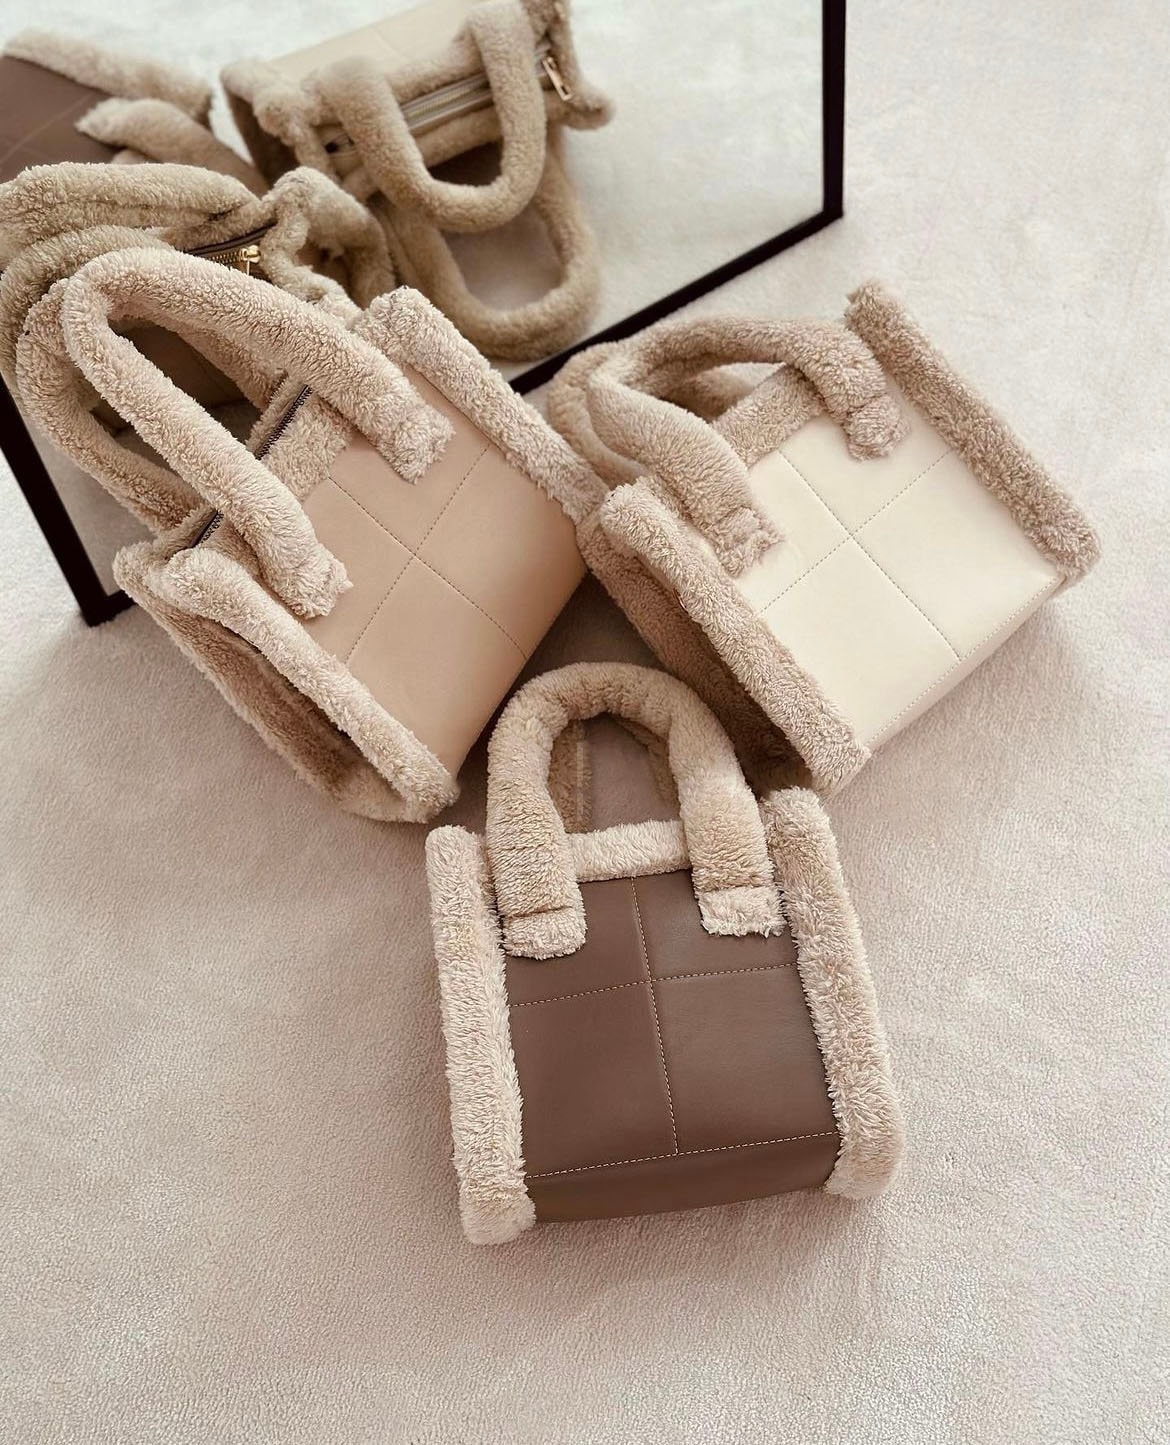 XPONNI Fuzzy Dumpling Bag, Cute Fluffy Bags Y2k, Cute Mini Handbags, Faux  Fur Bag Crossbody, Soft Shoulder Bag (beige): Handbags